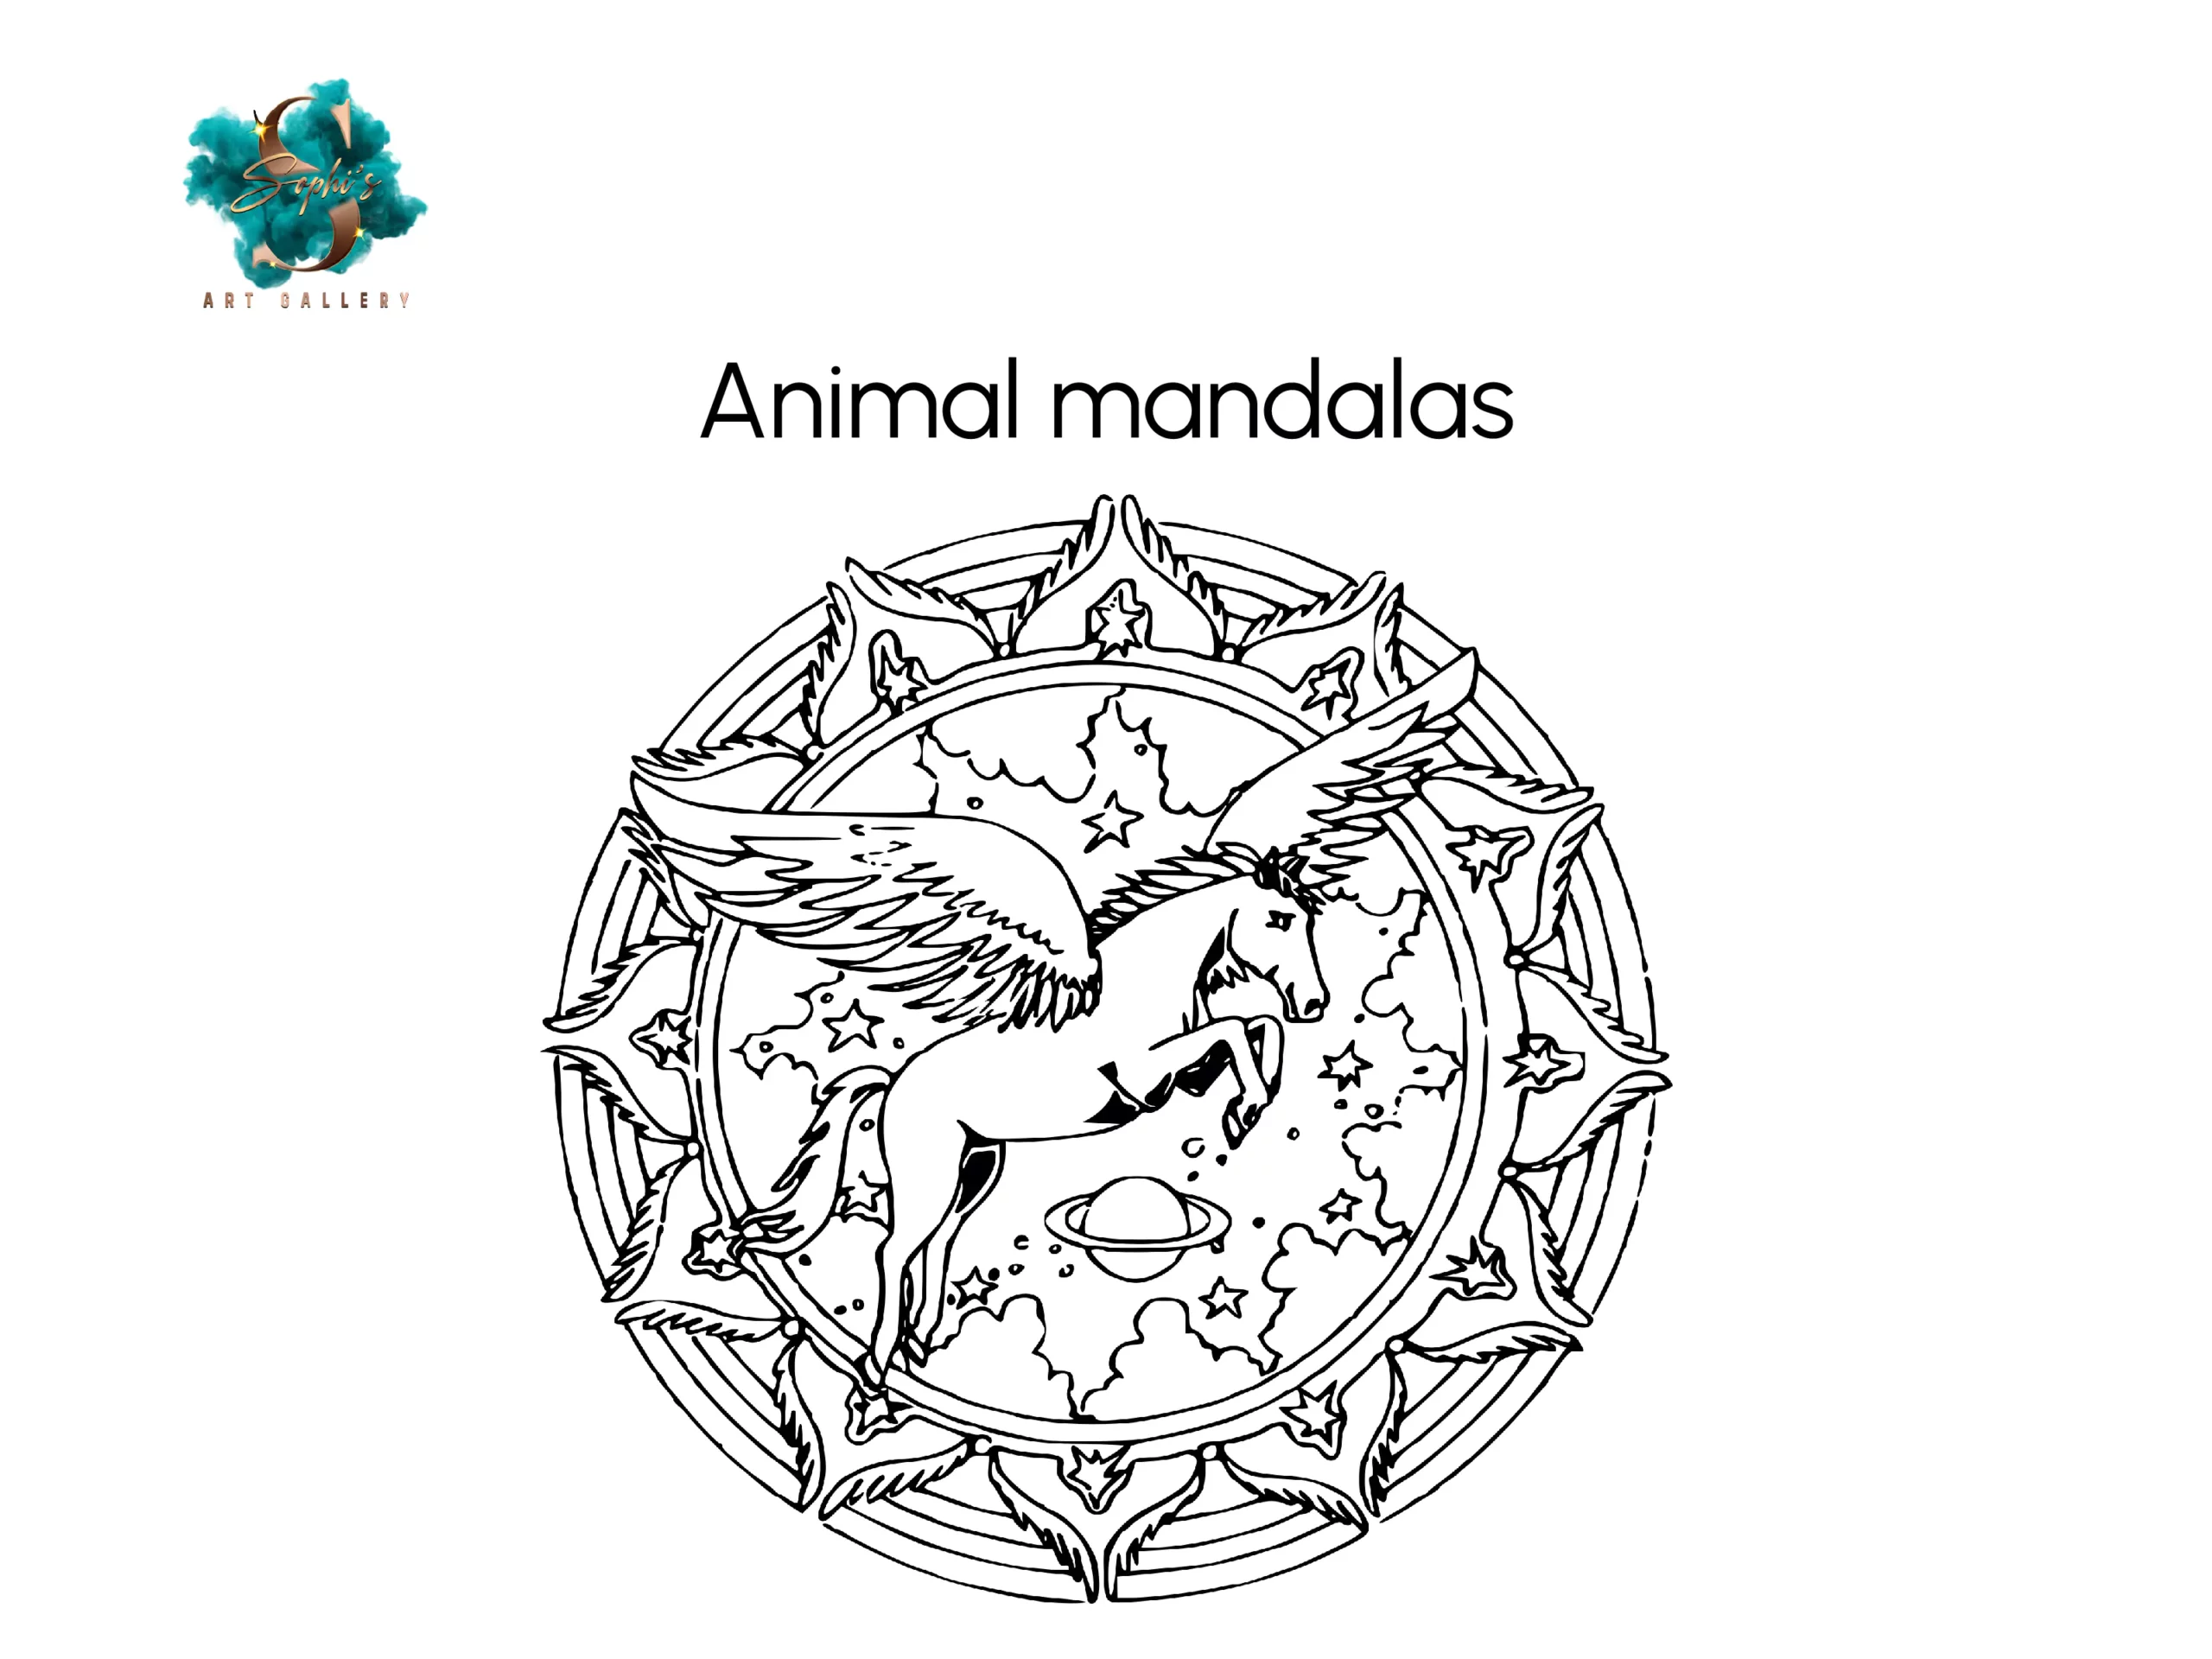 Animal mandalas